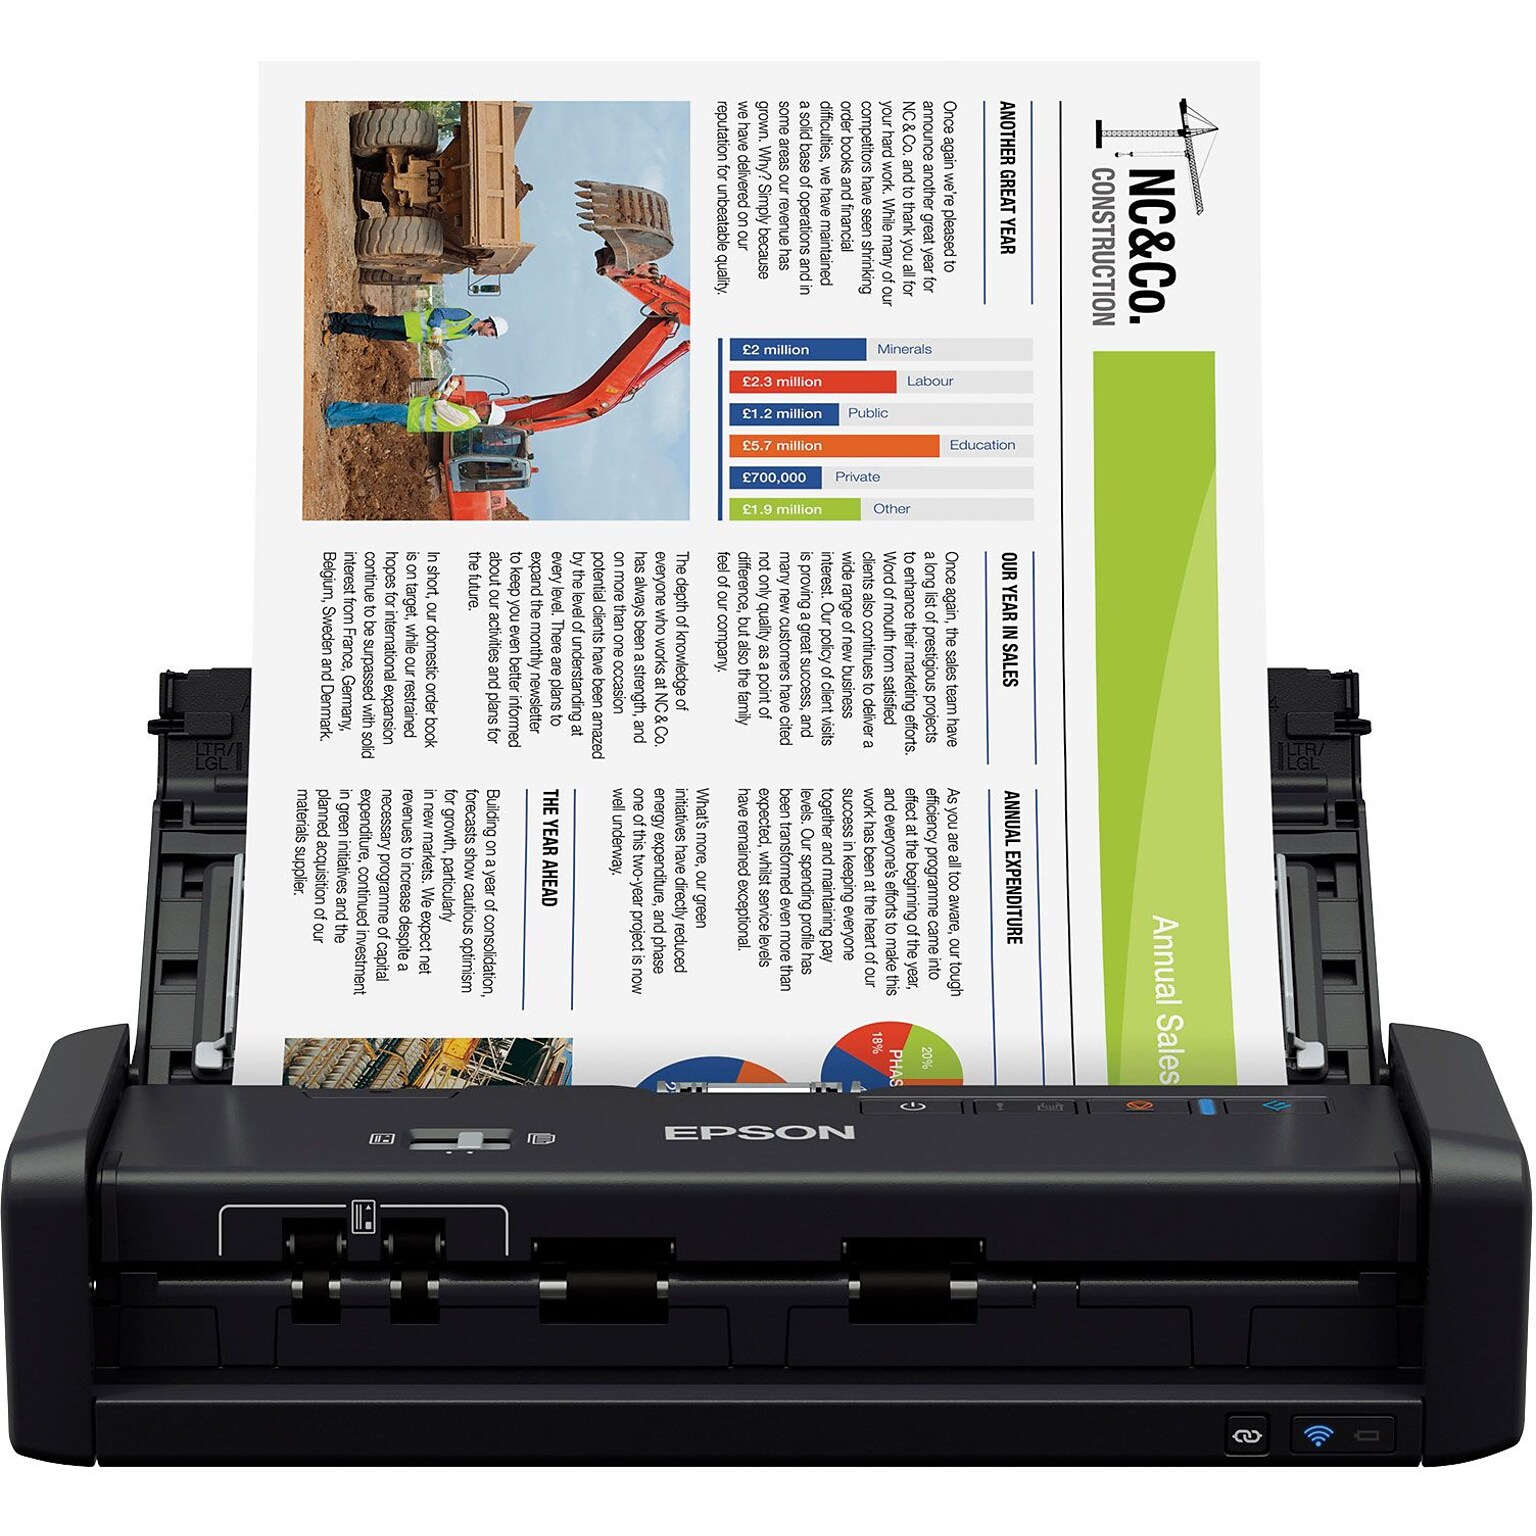 Epson ES-300W Wireless Duplex Mobile Color Document Scanner with Auto Document Feeder